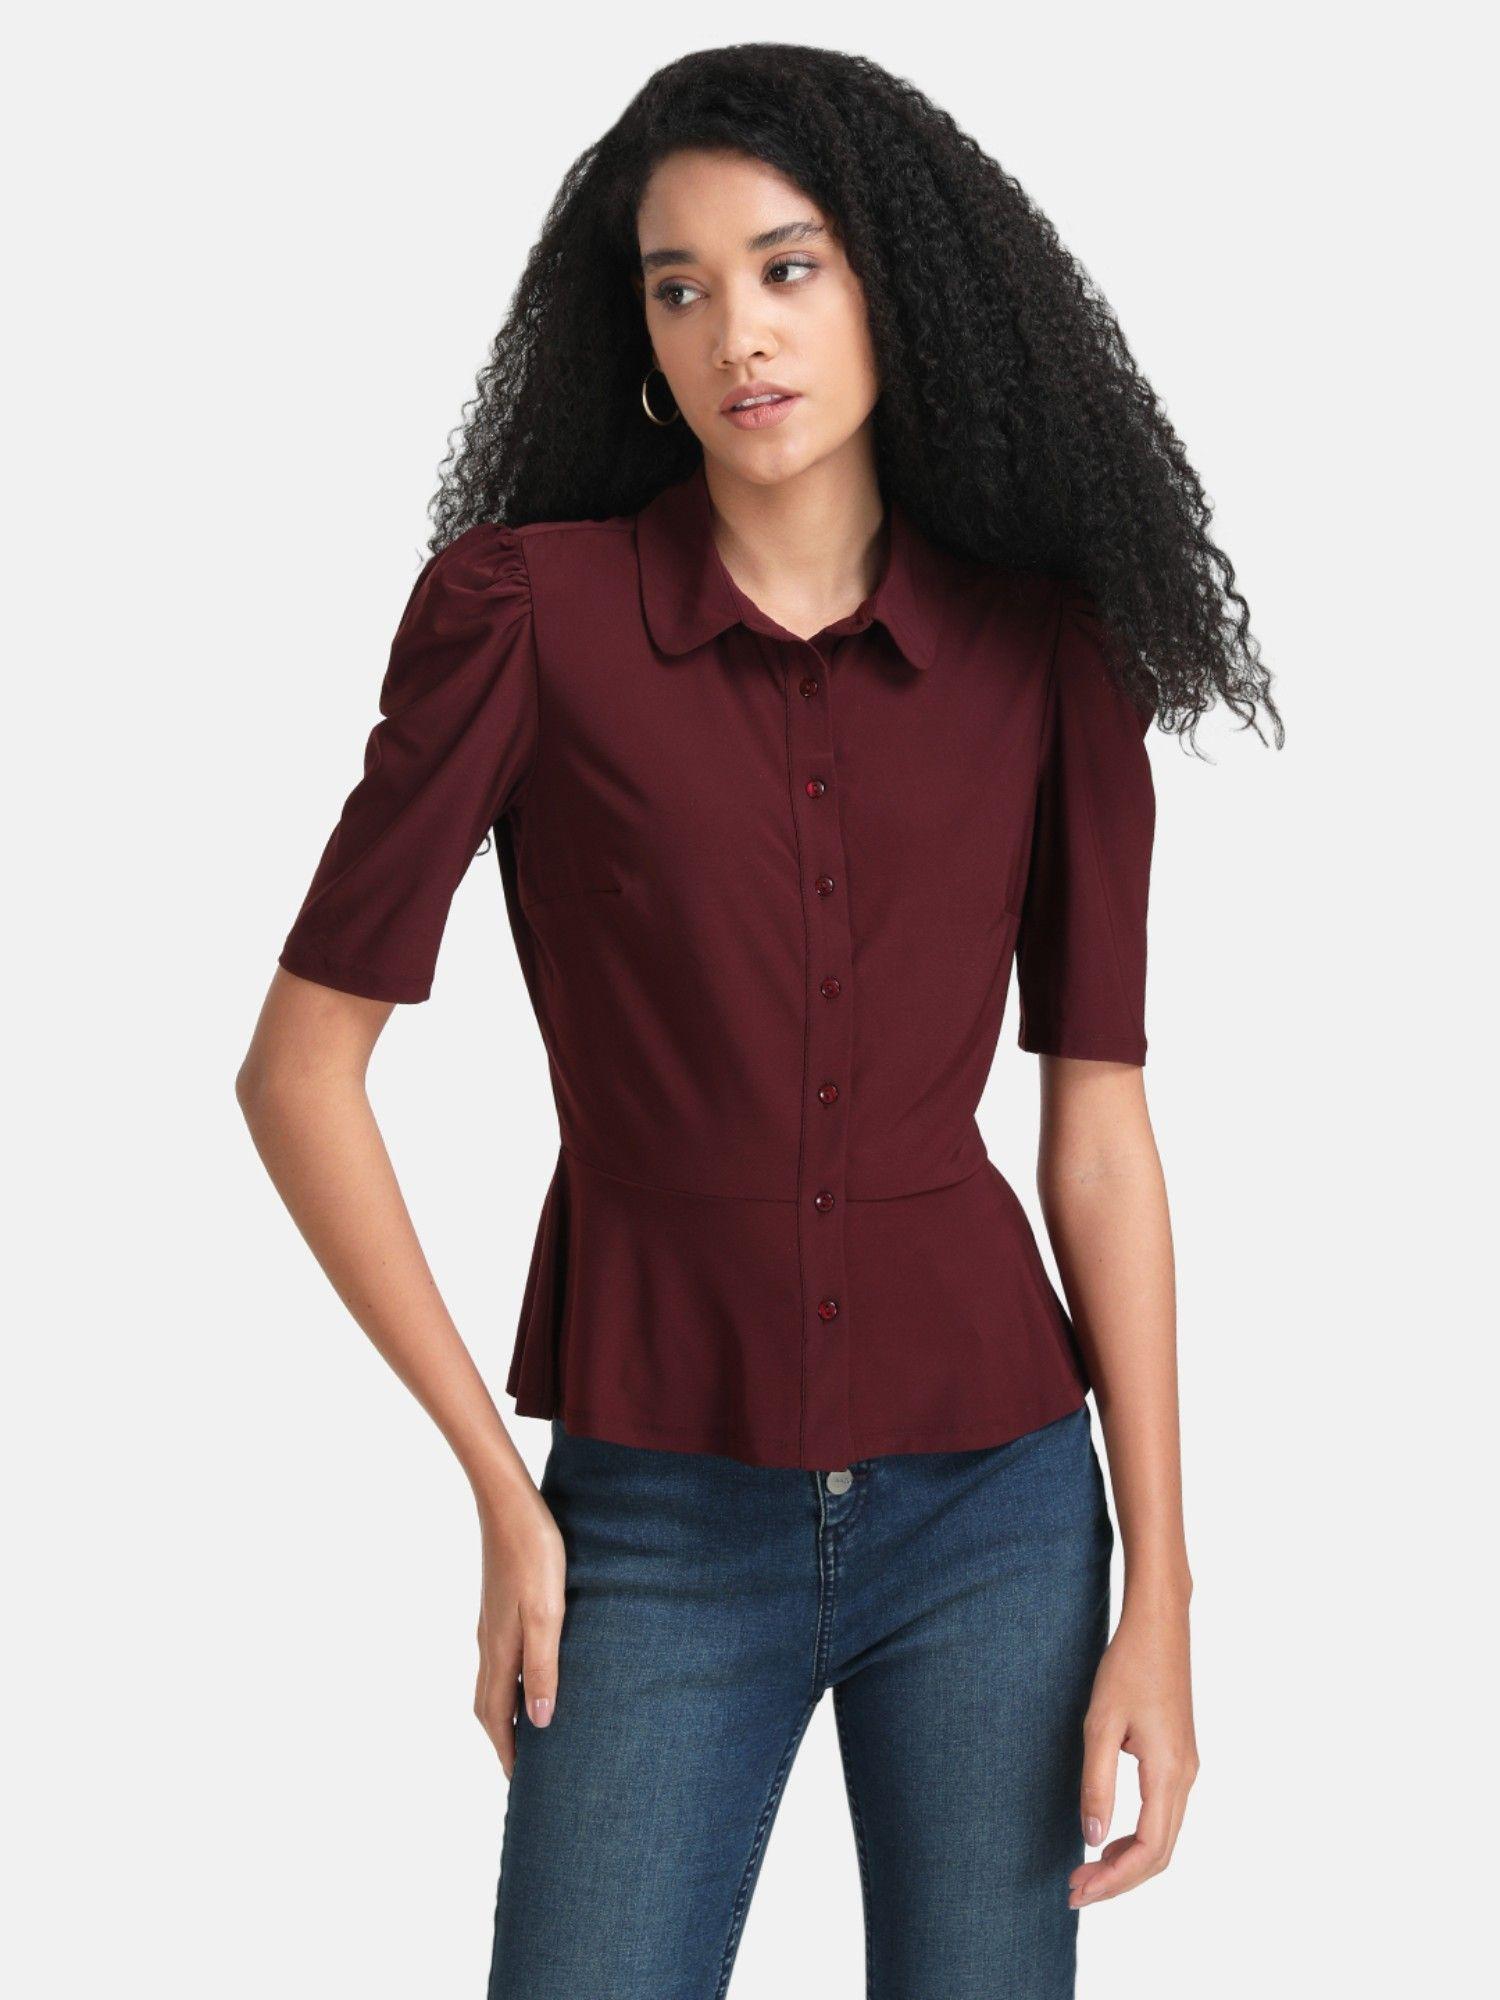 maroon peplum shirt with puff sleeves